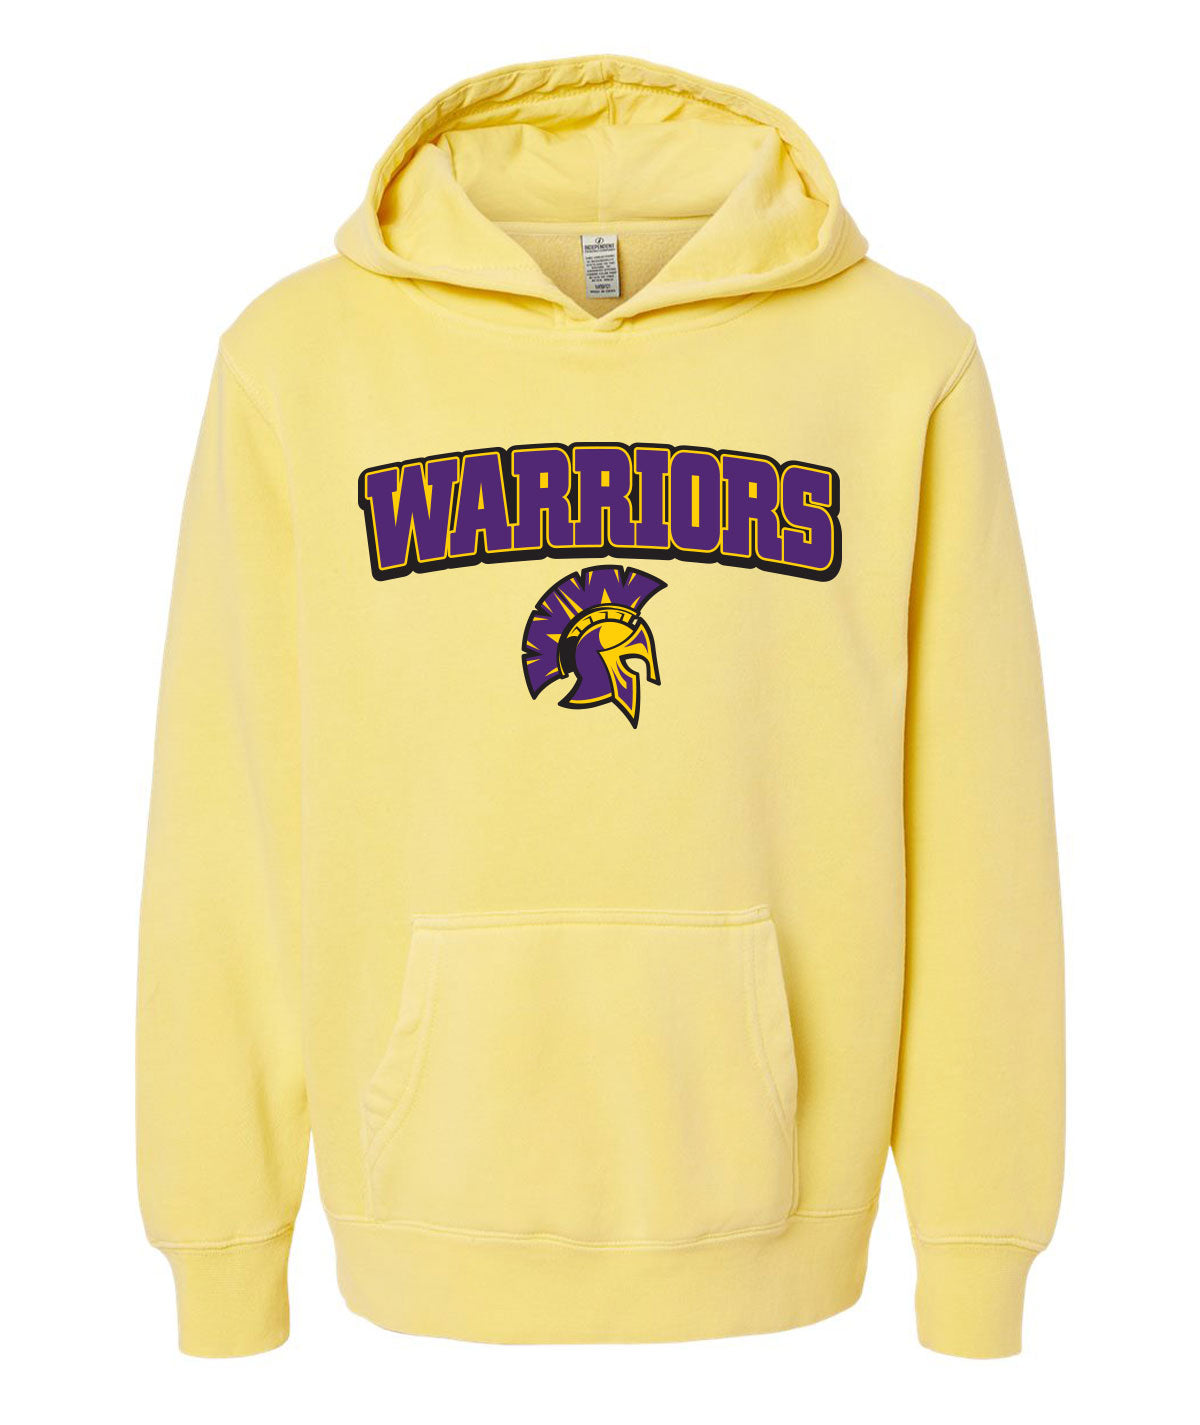 Warriors Arch Youth Raglan Hooded Sweatshirt